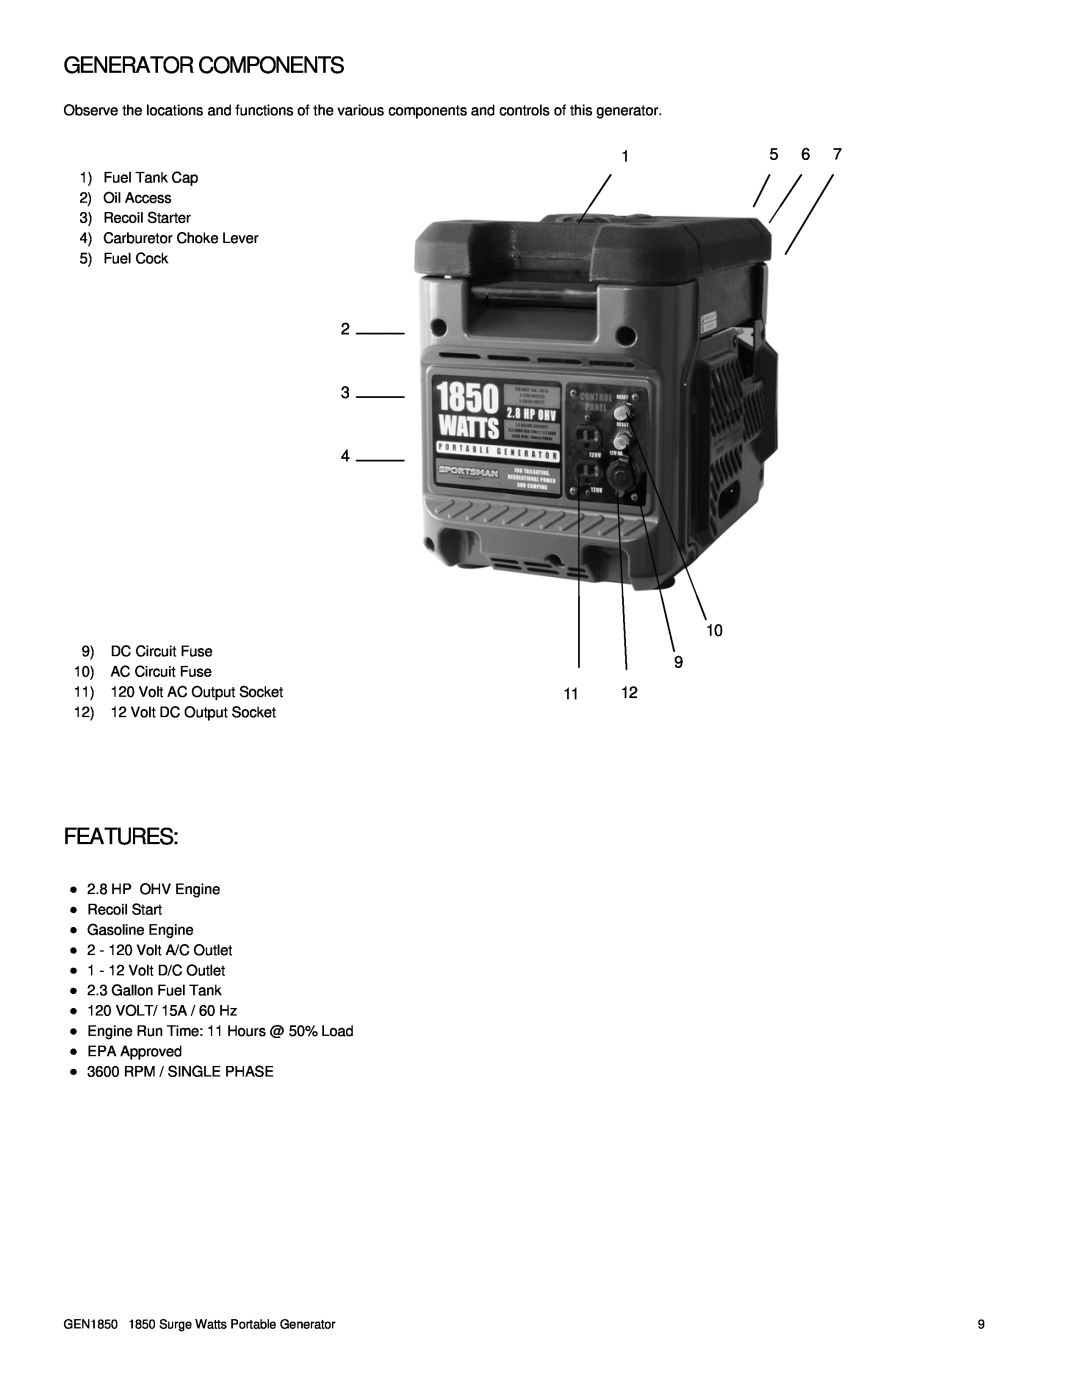 Buffalo Tools GEN1850 instruction manual Generator Components, Features 